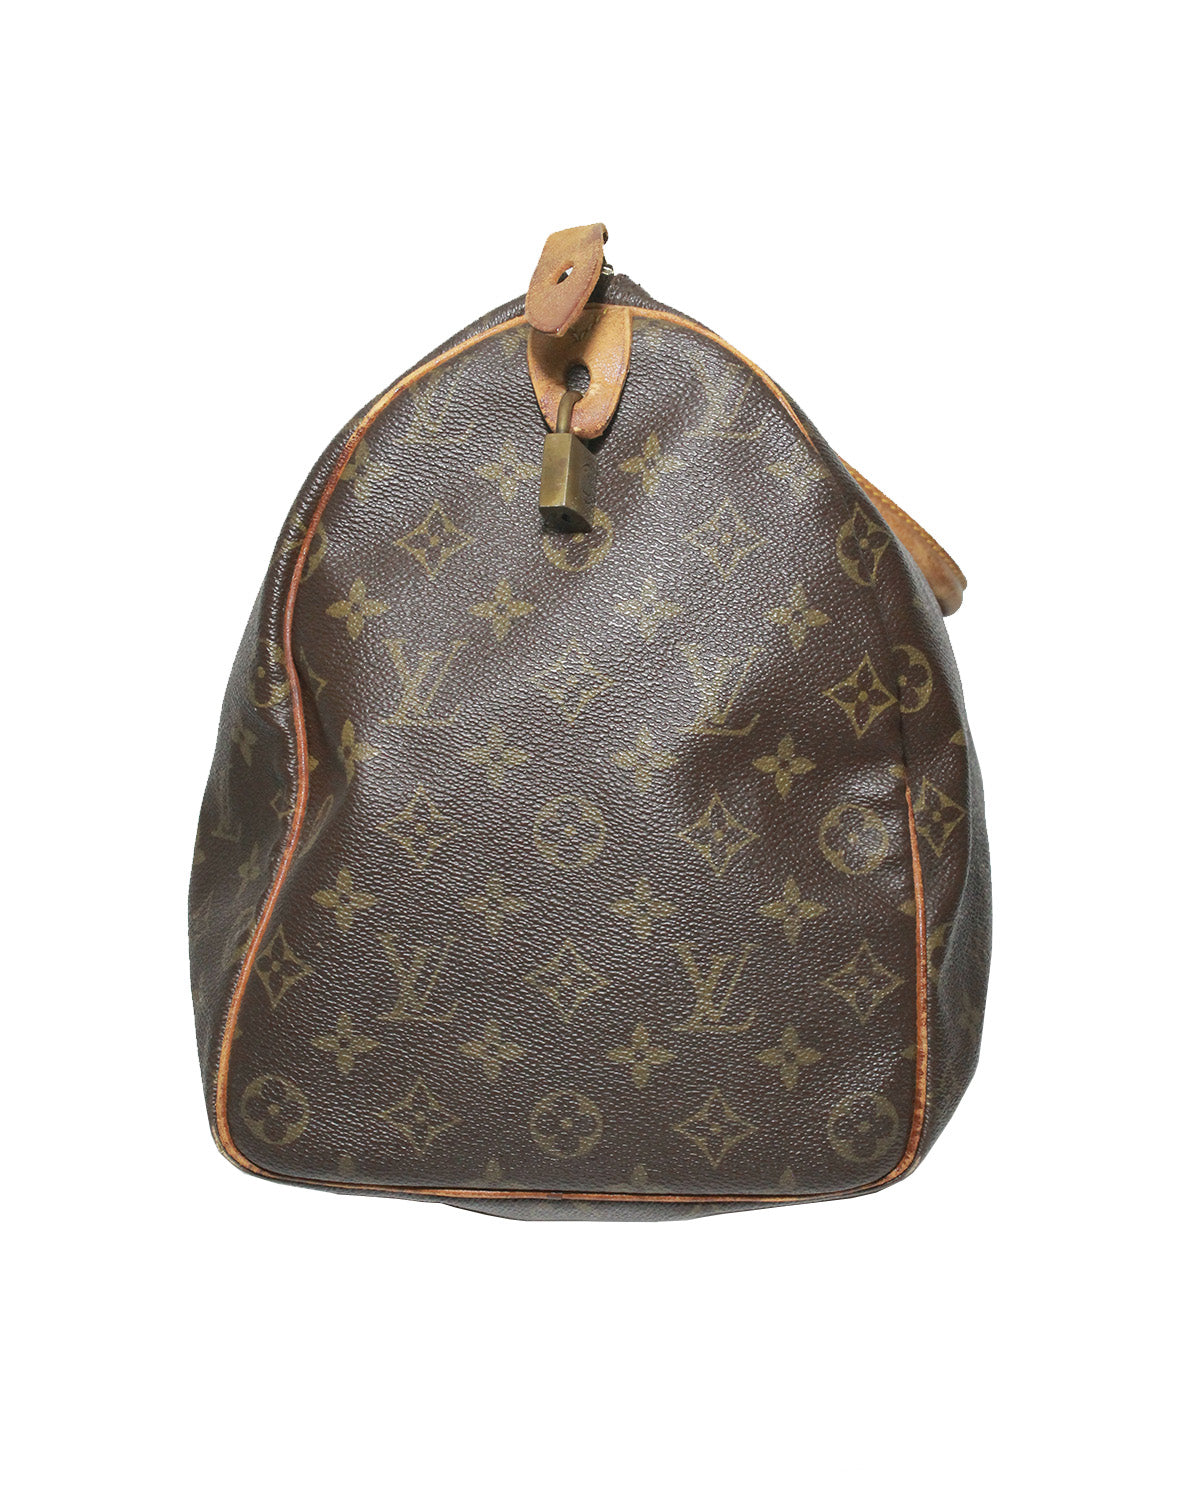 Louis Vuitton Speedy 40 - Good or Bag